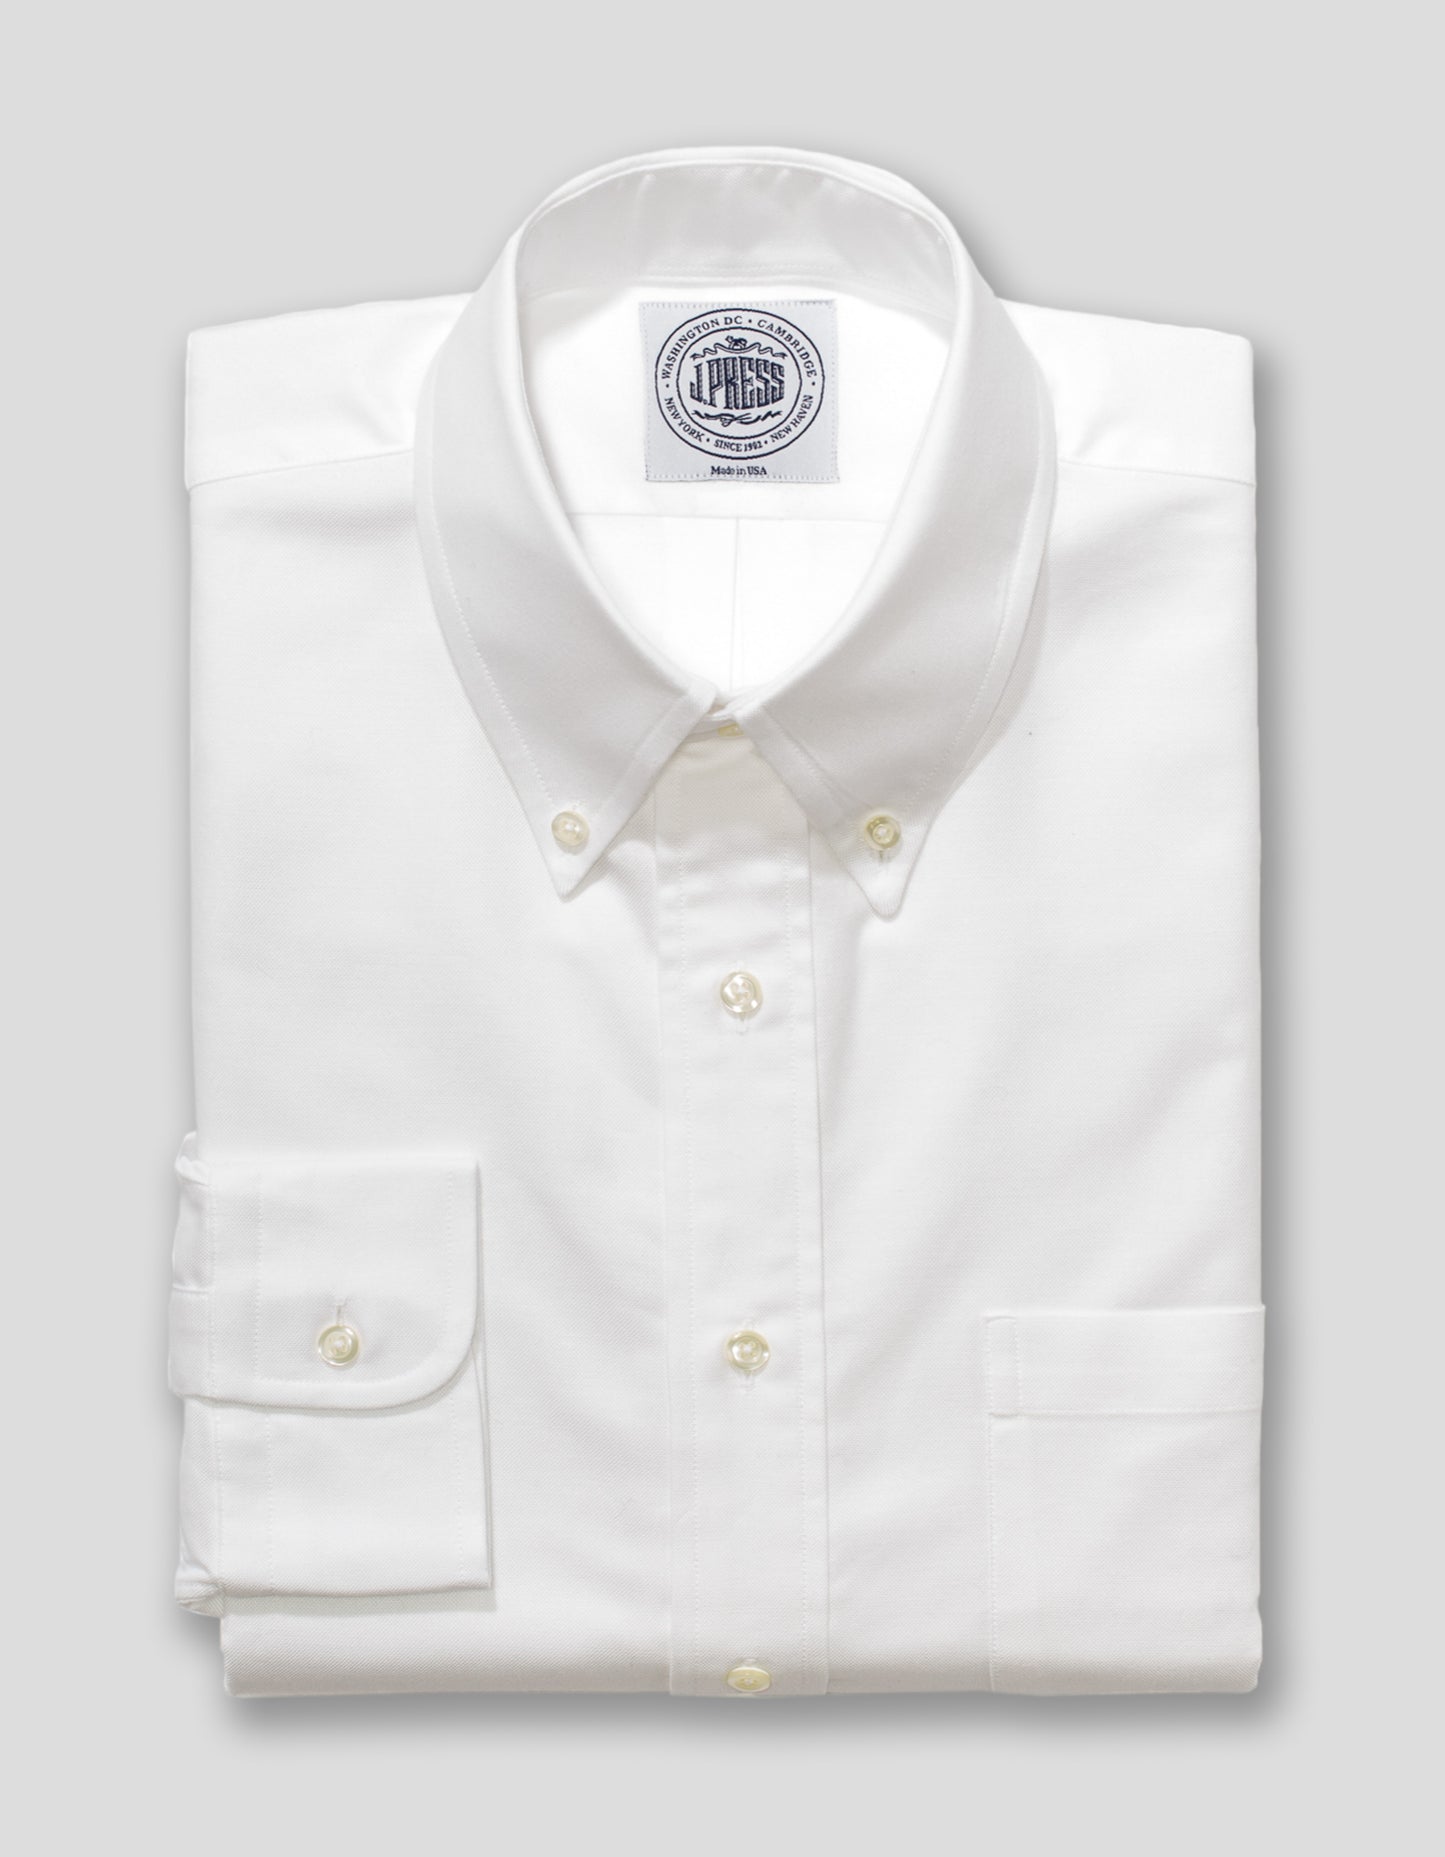 WHITE OXFORD DRESS SHIRT